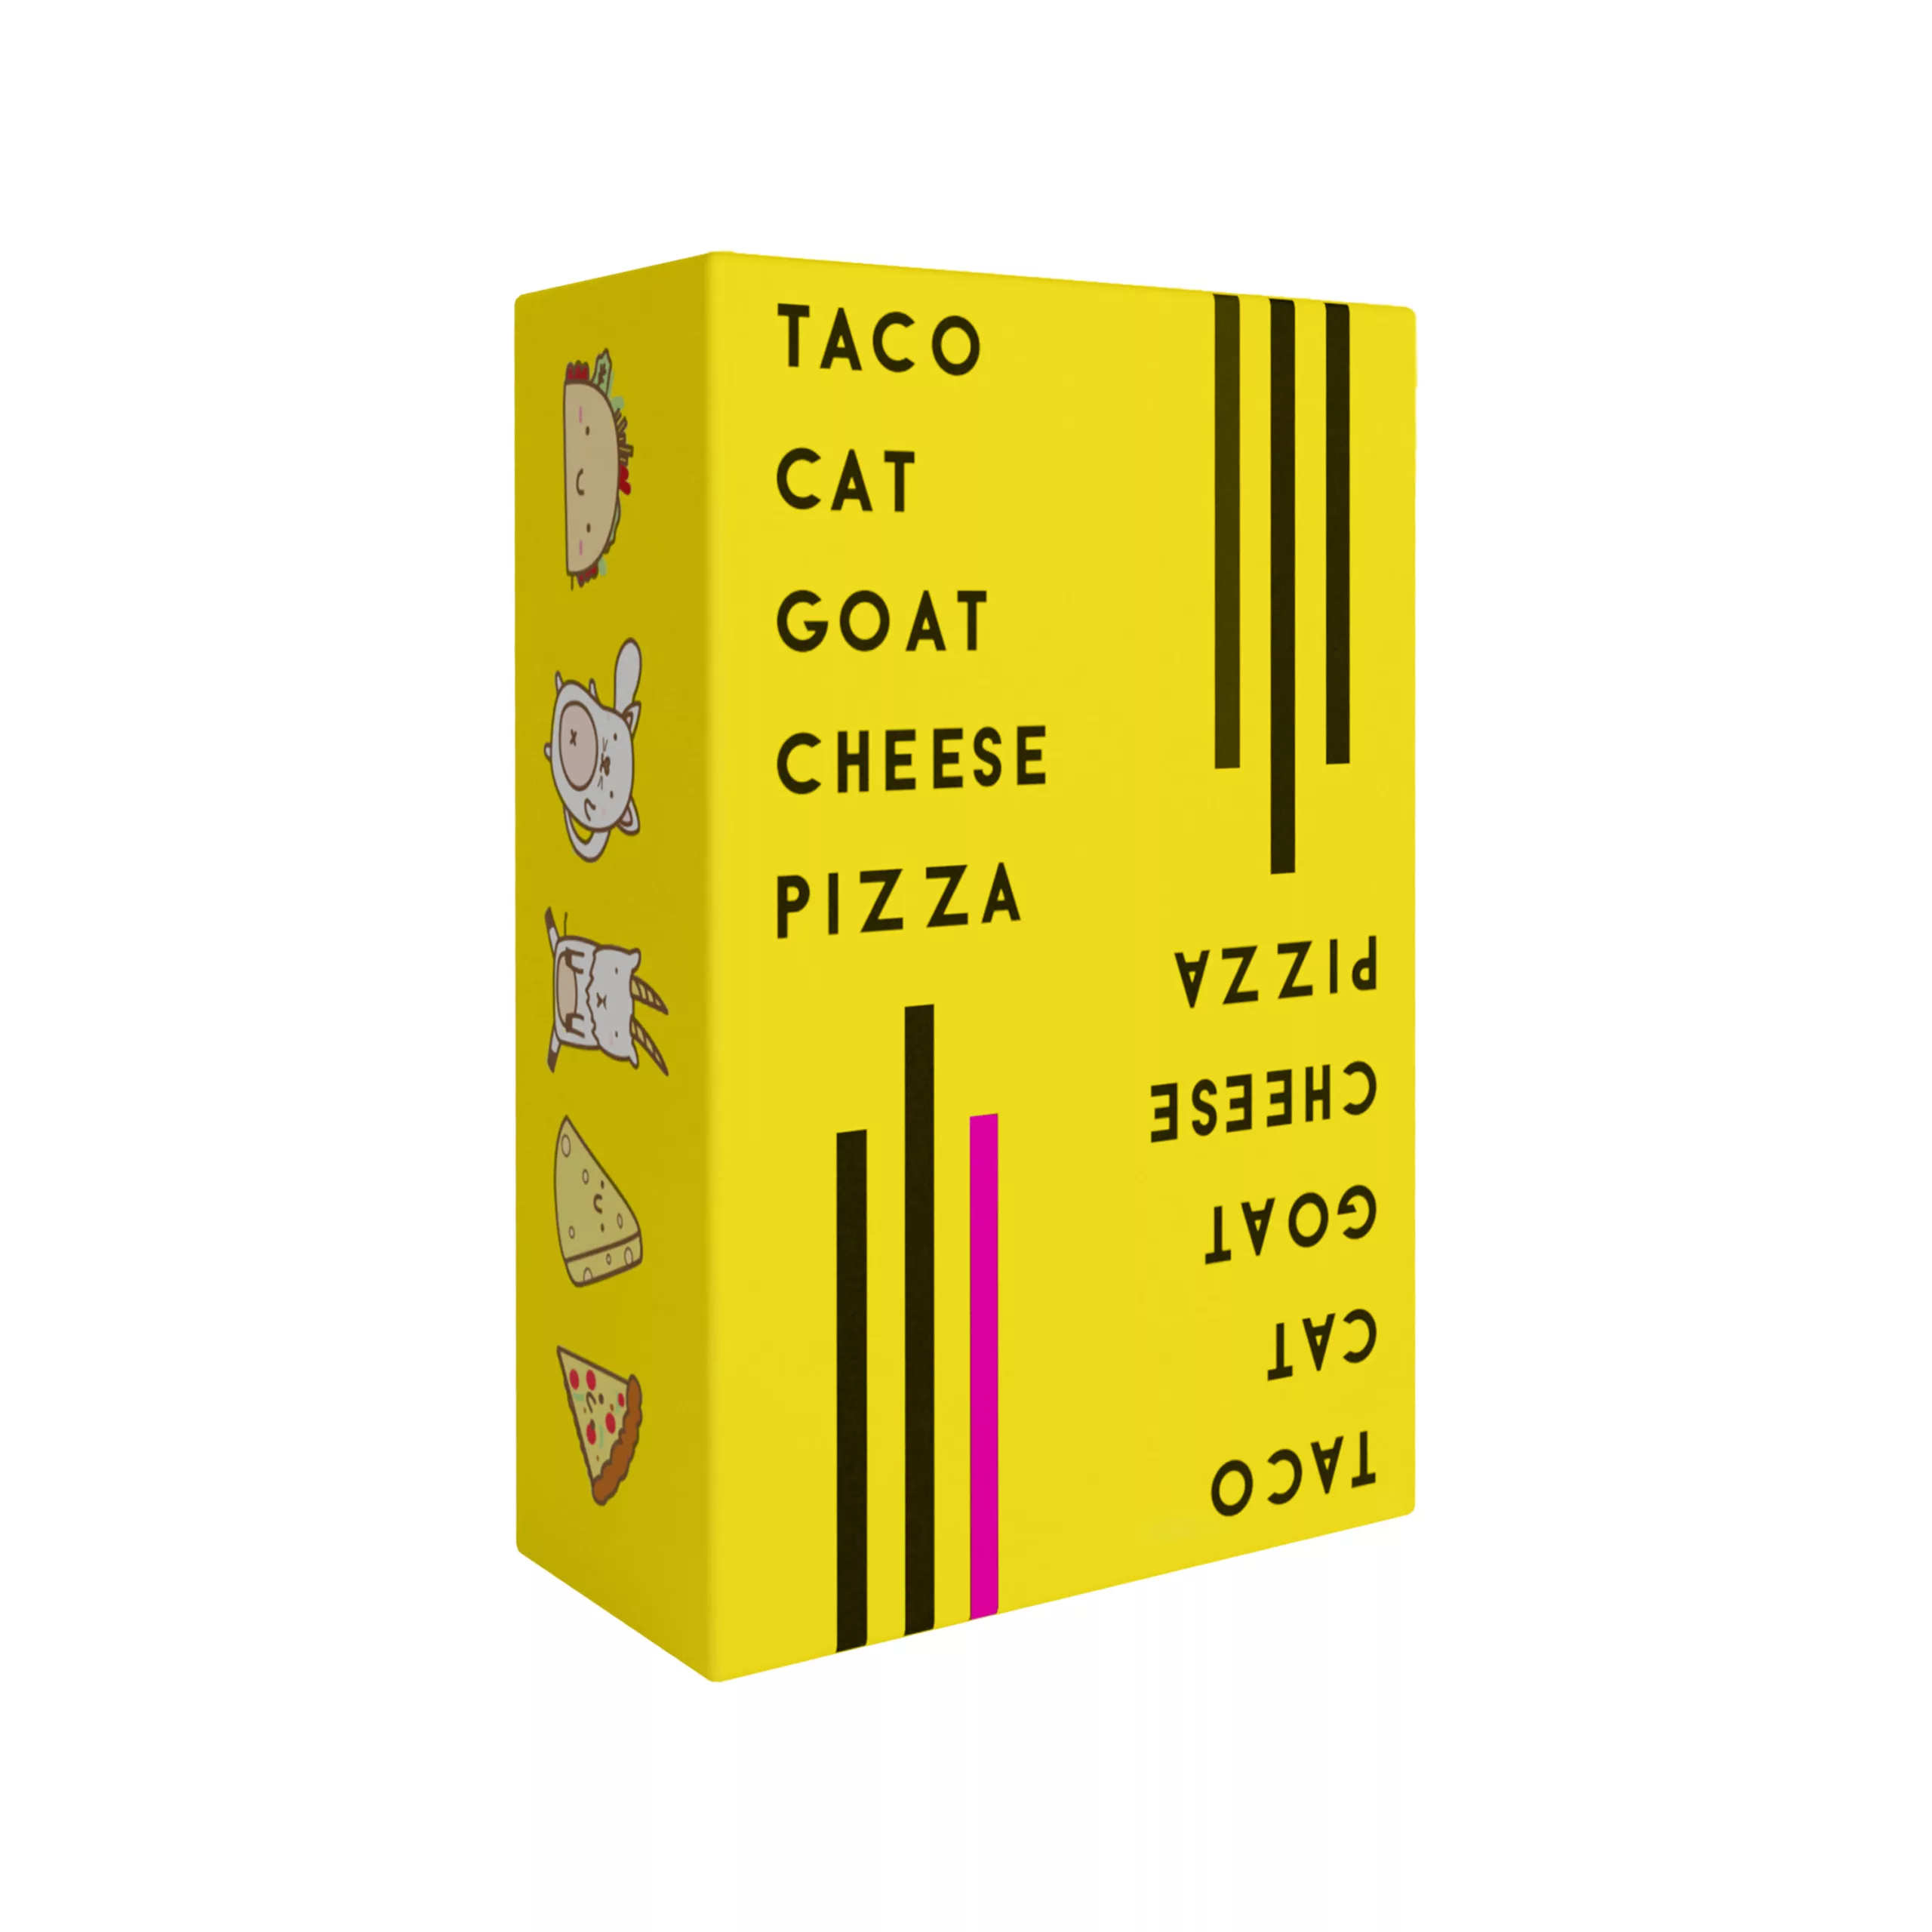 Hero image of the Taco Cat Goat Cheese Pizza tuck box